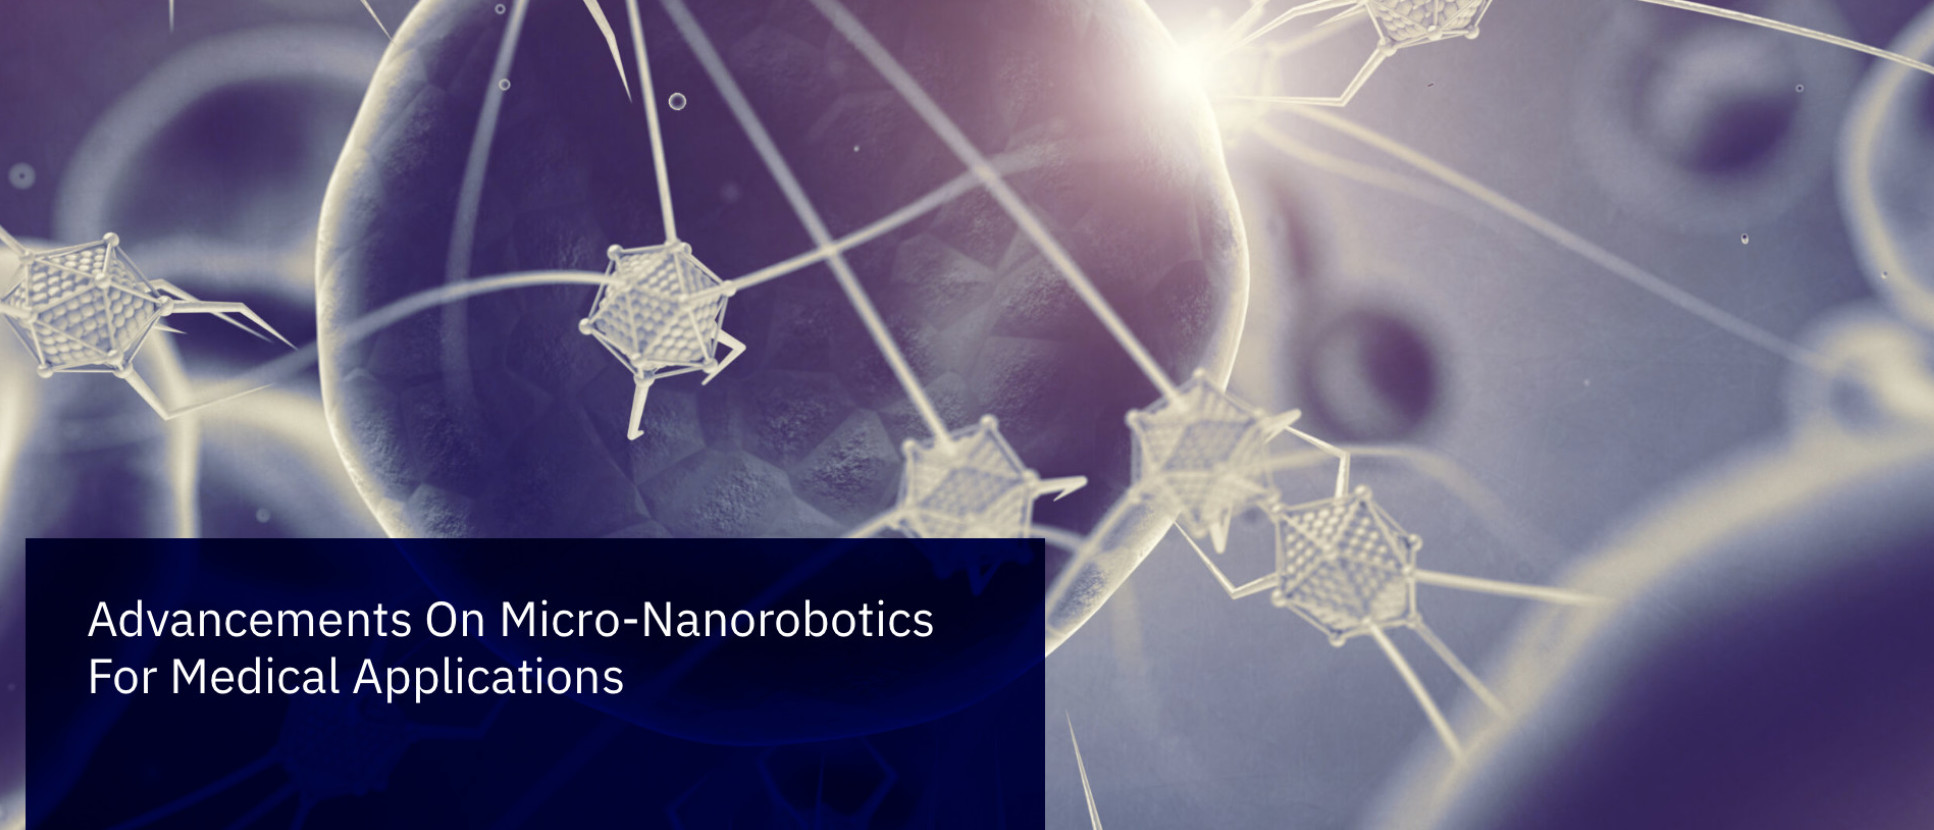 HSMR21 Workshop- 'Advancements On Micro-Nanorobotics For Medical Applications'